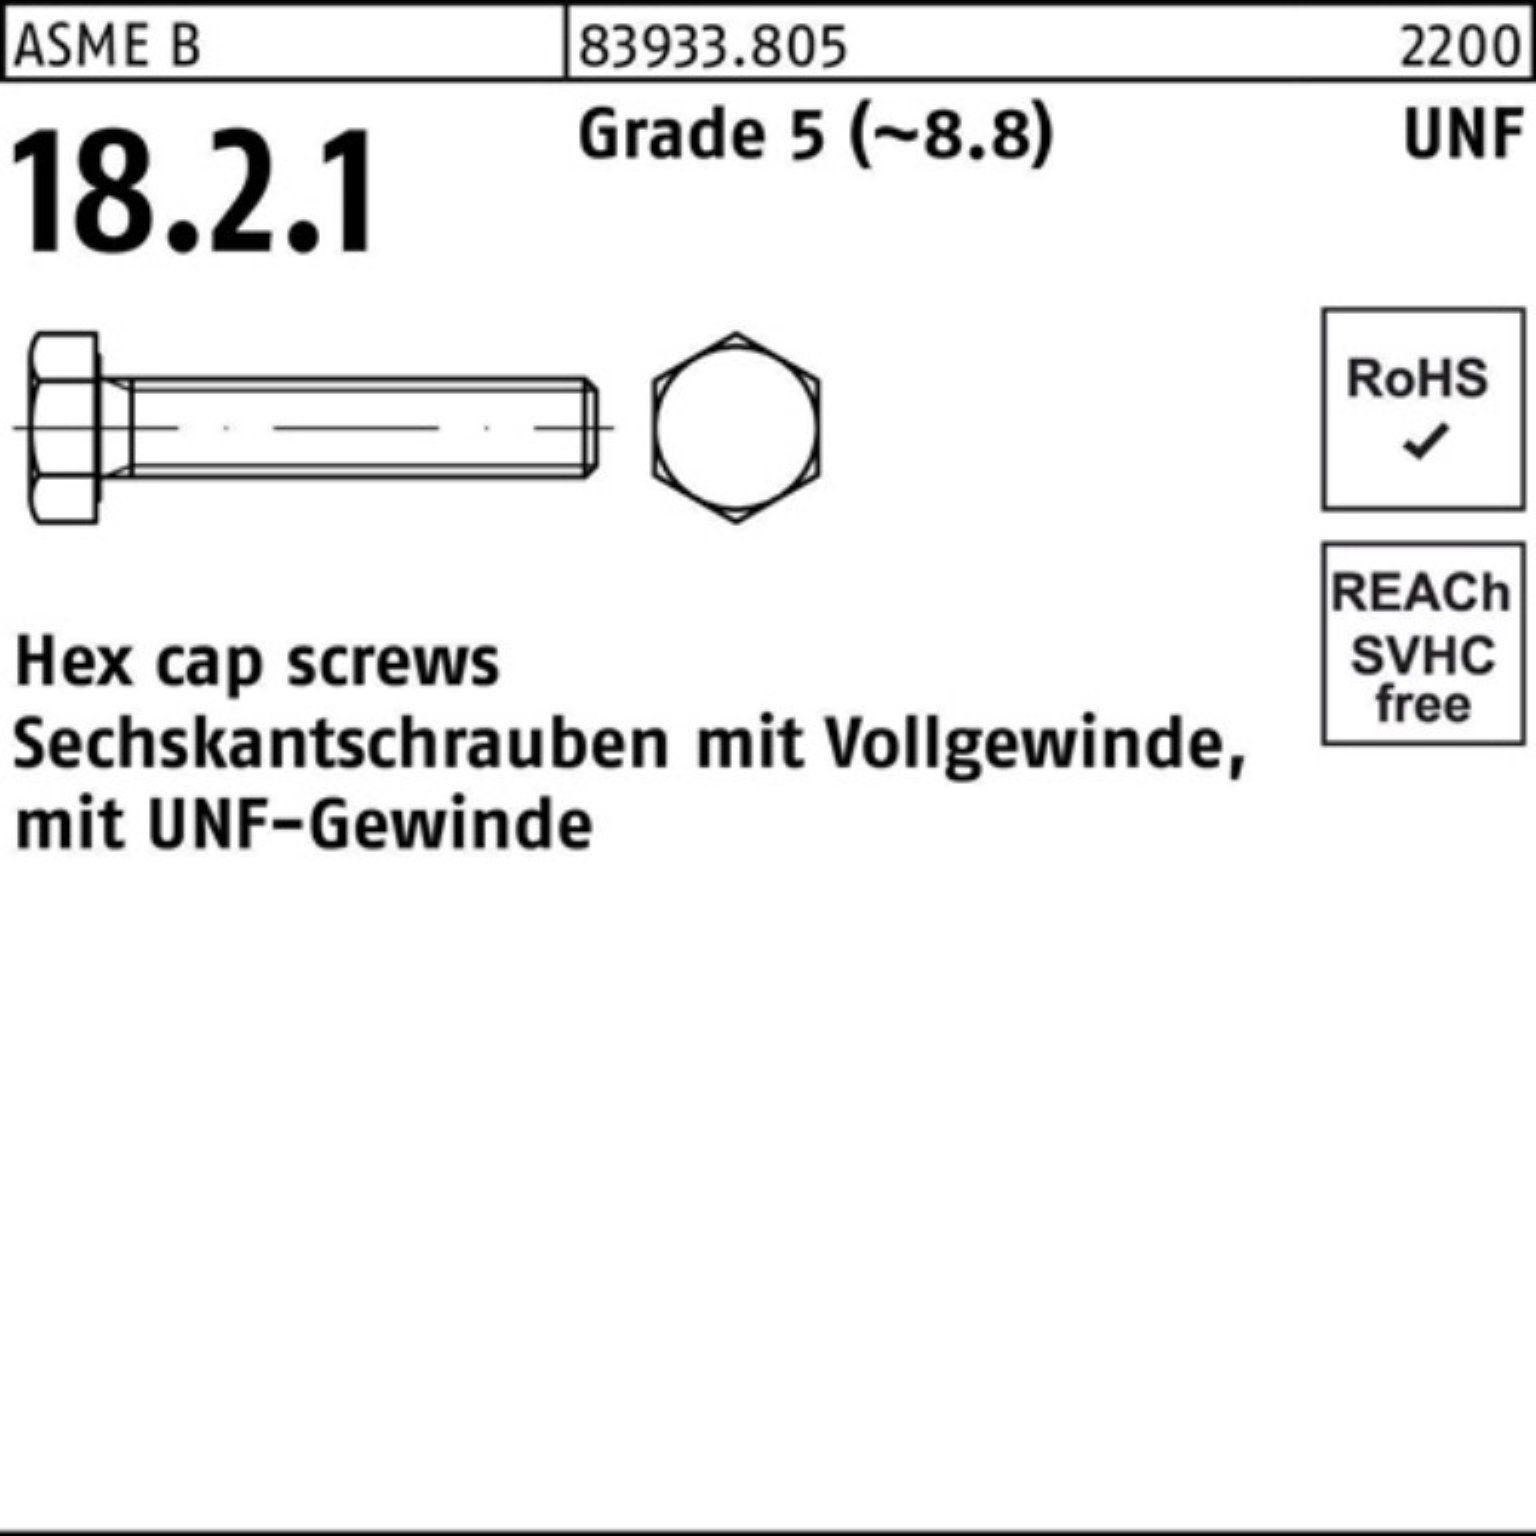 Reyher Sechskantschraube 100er Pack Sechskantschraube R 83933 UNF-Gewinde VG 3/8x 5/8 Grade 5